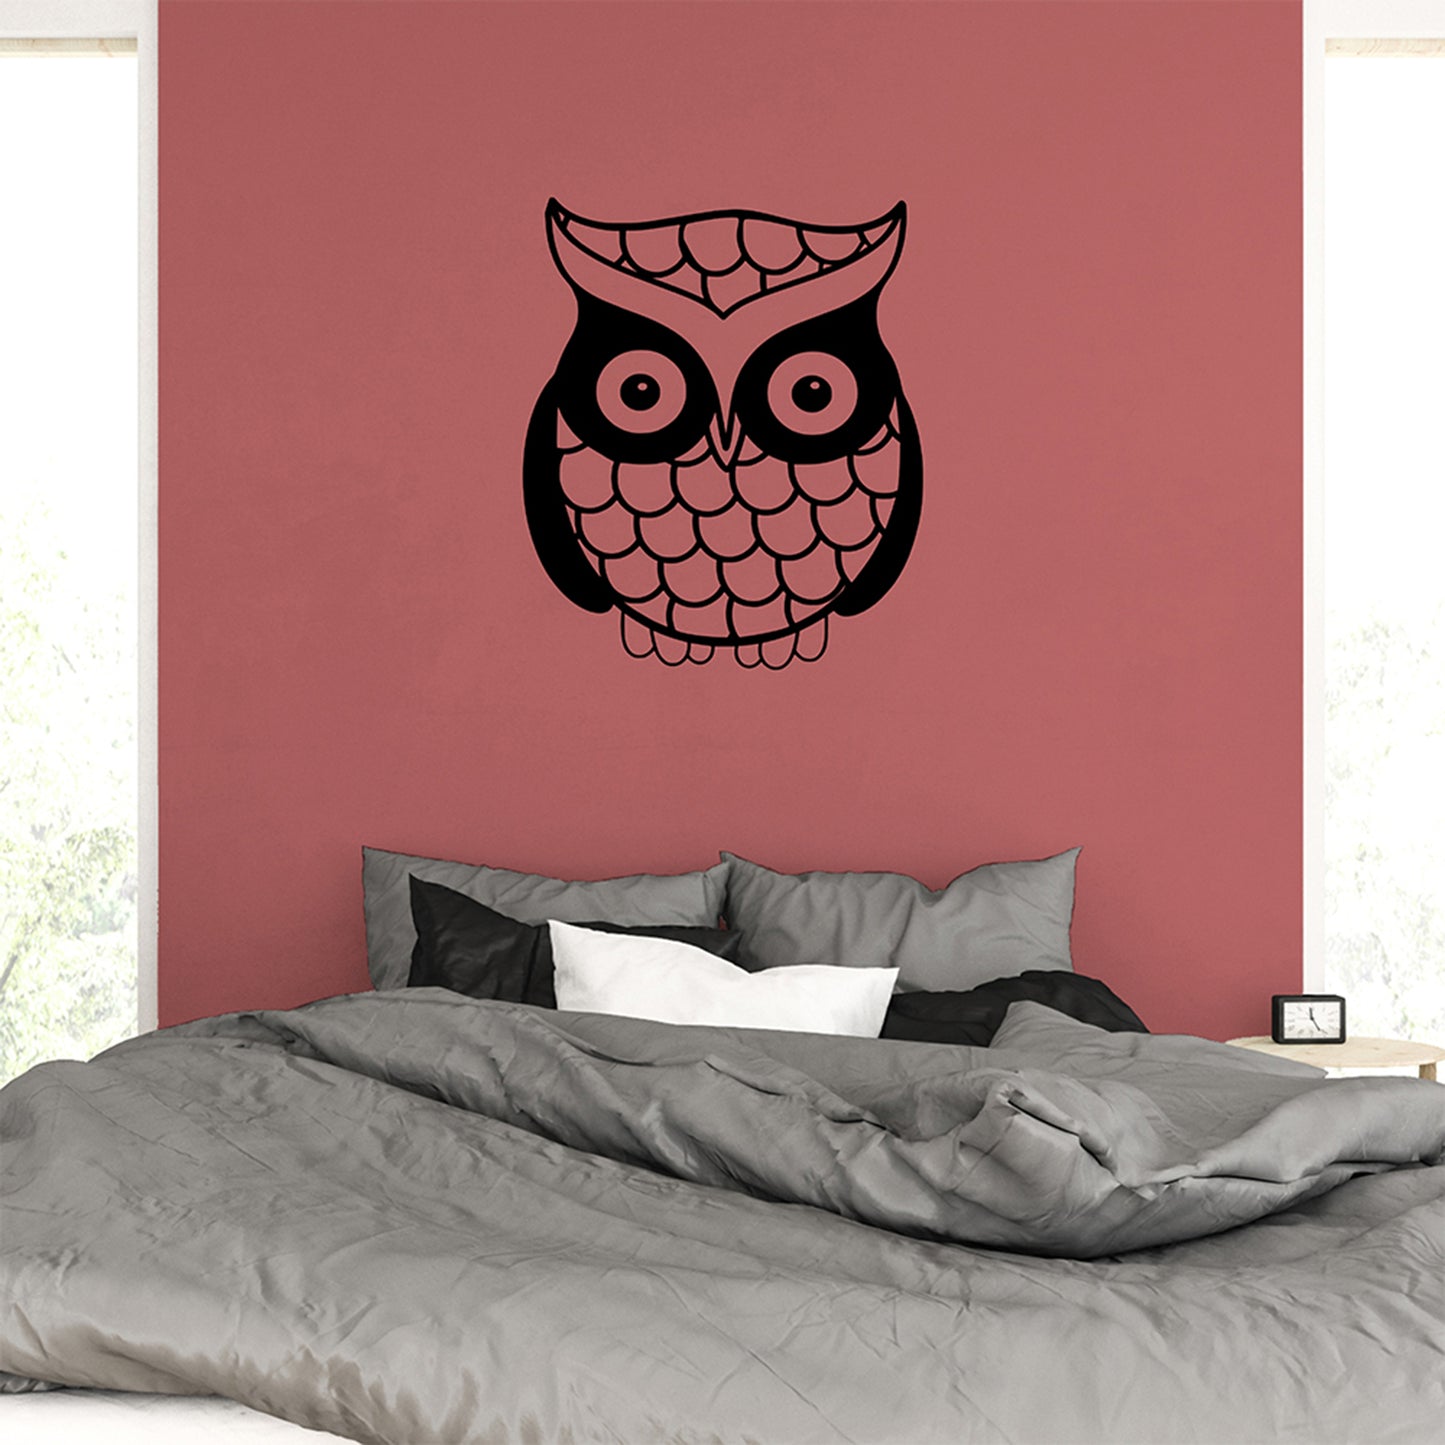 Cute owl | Wall decal